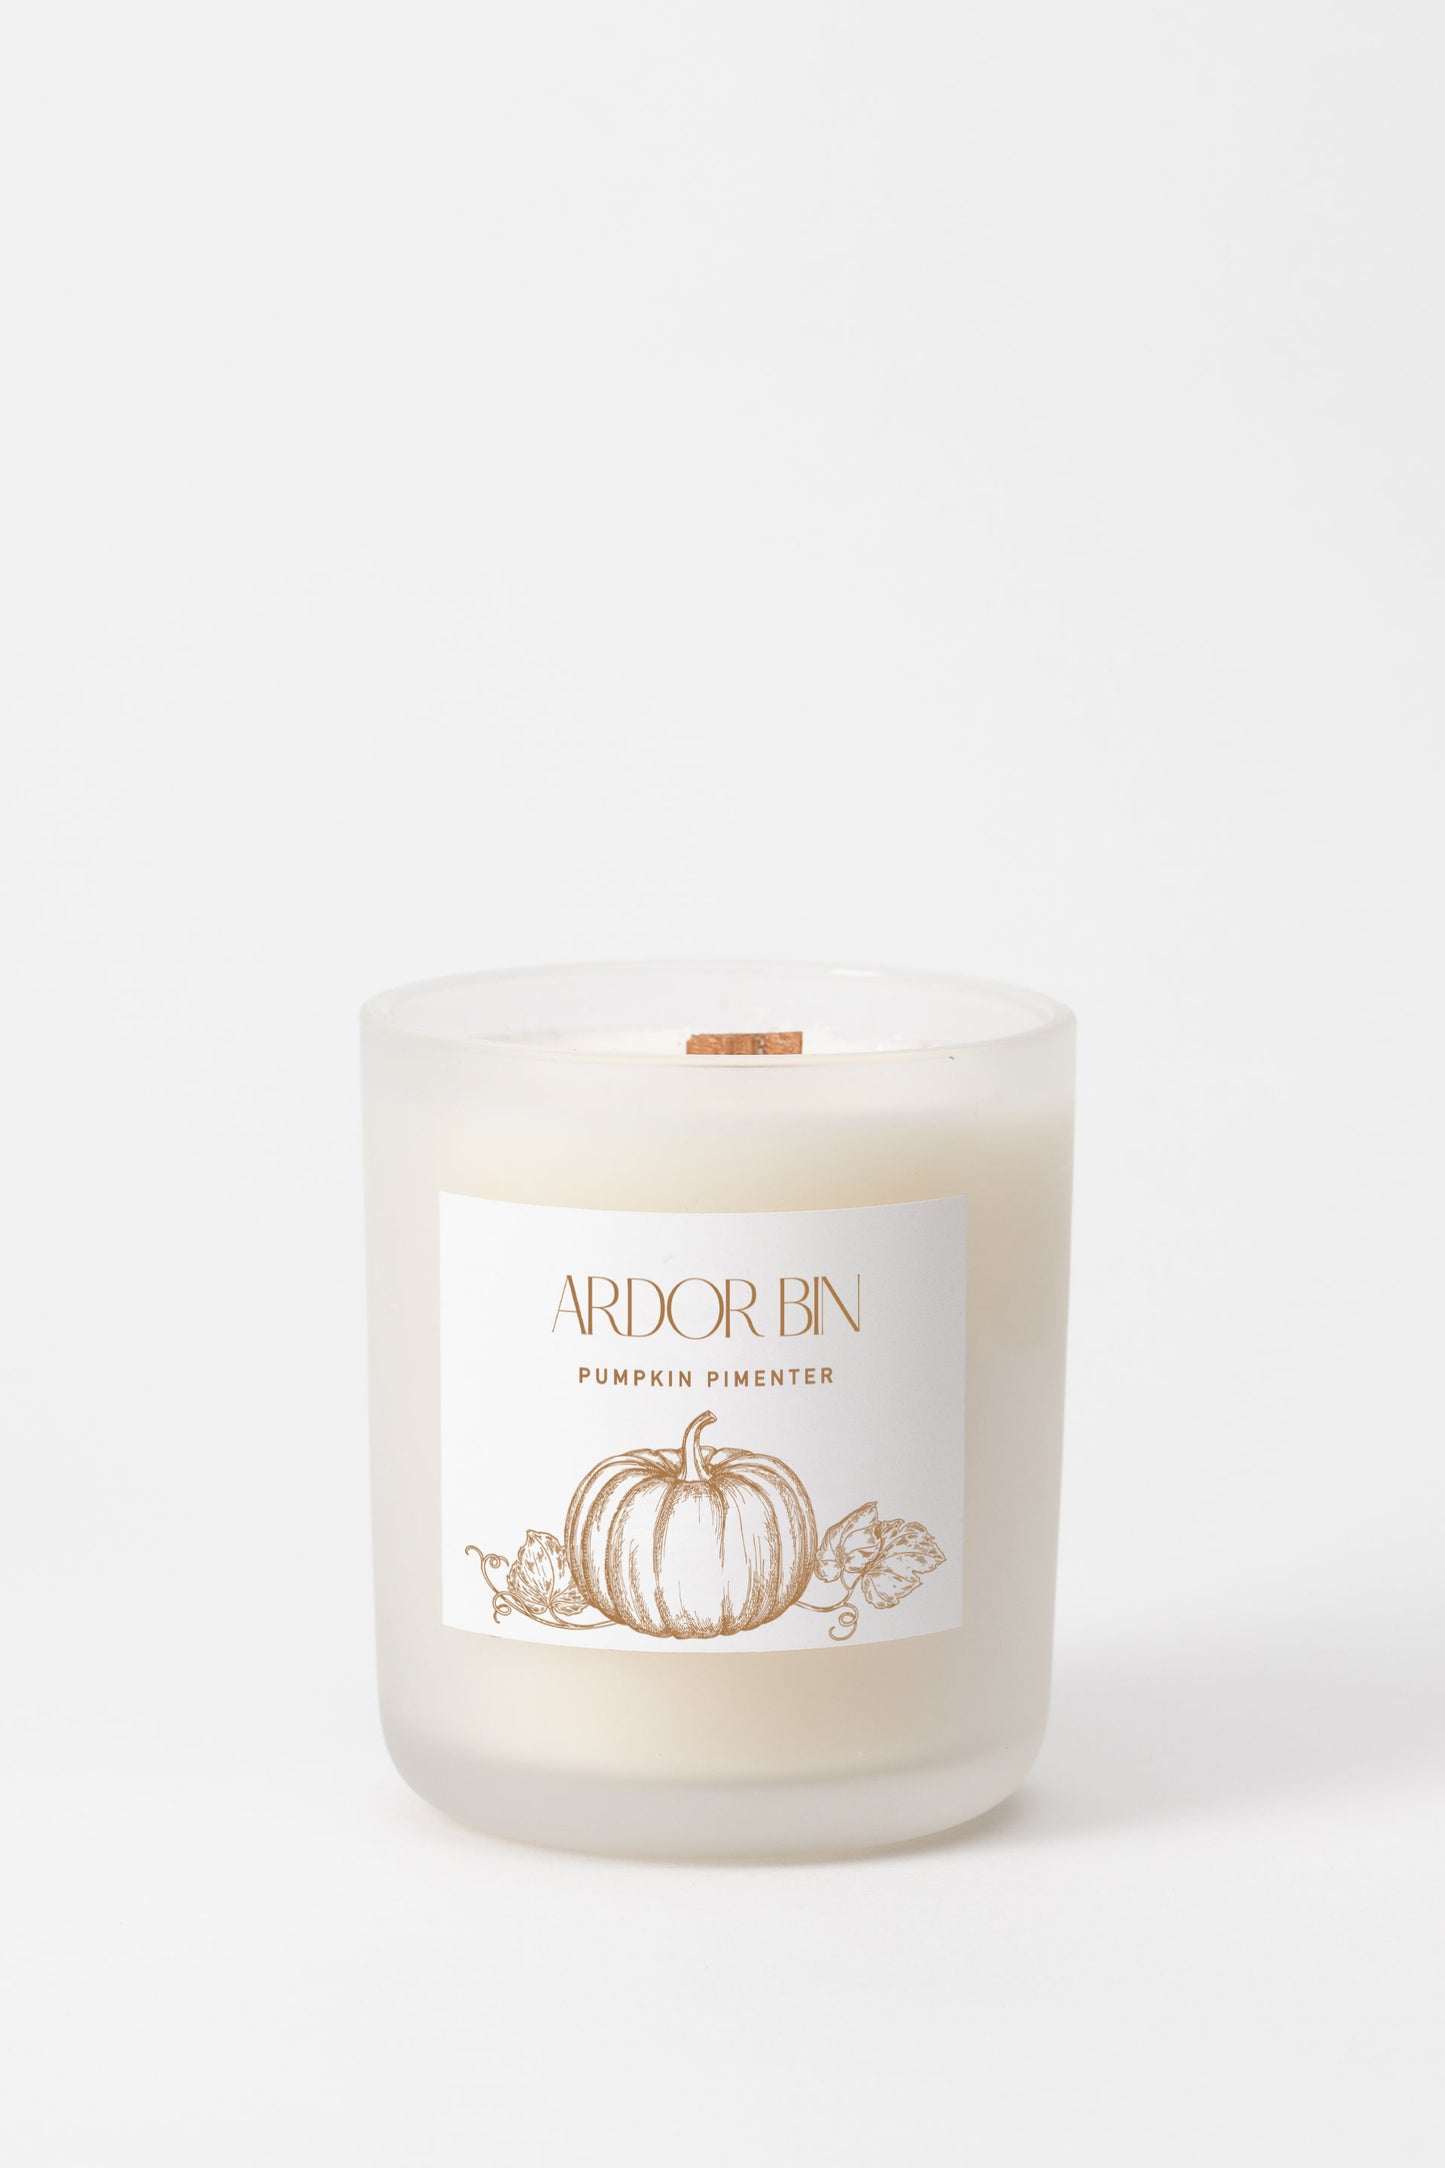 Pumpkin Pimenter (Autumn Limited Edition Pumpkin Spice Candle) - Ardor Bin 